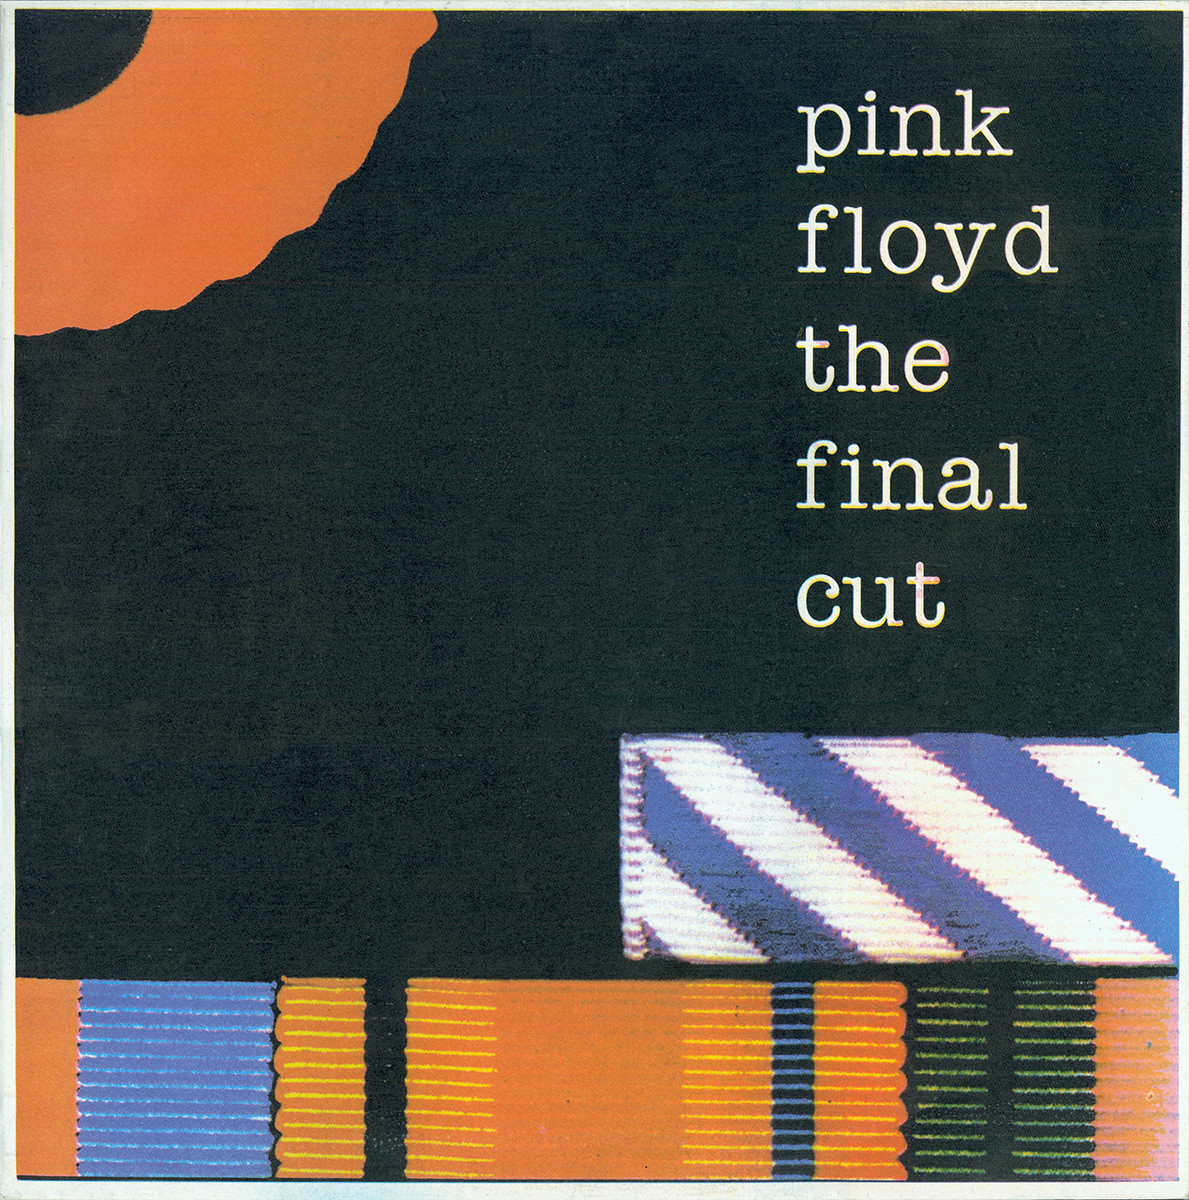 PINK FLOYD. The Final Cut